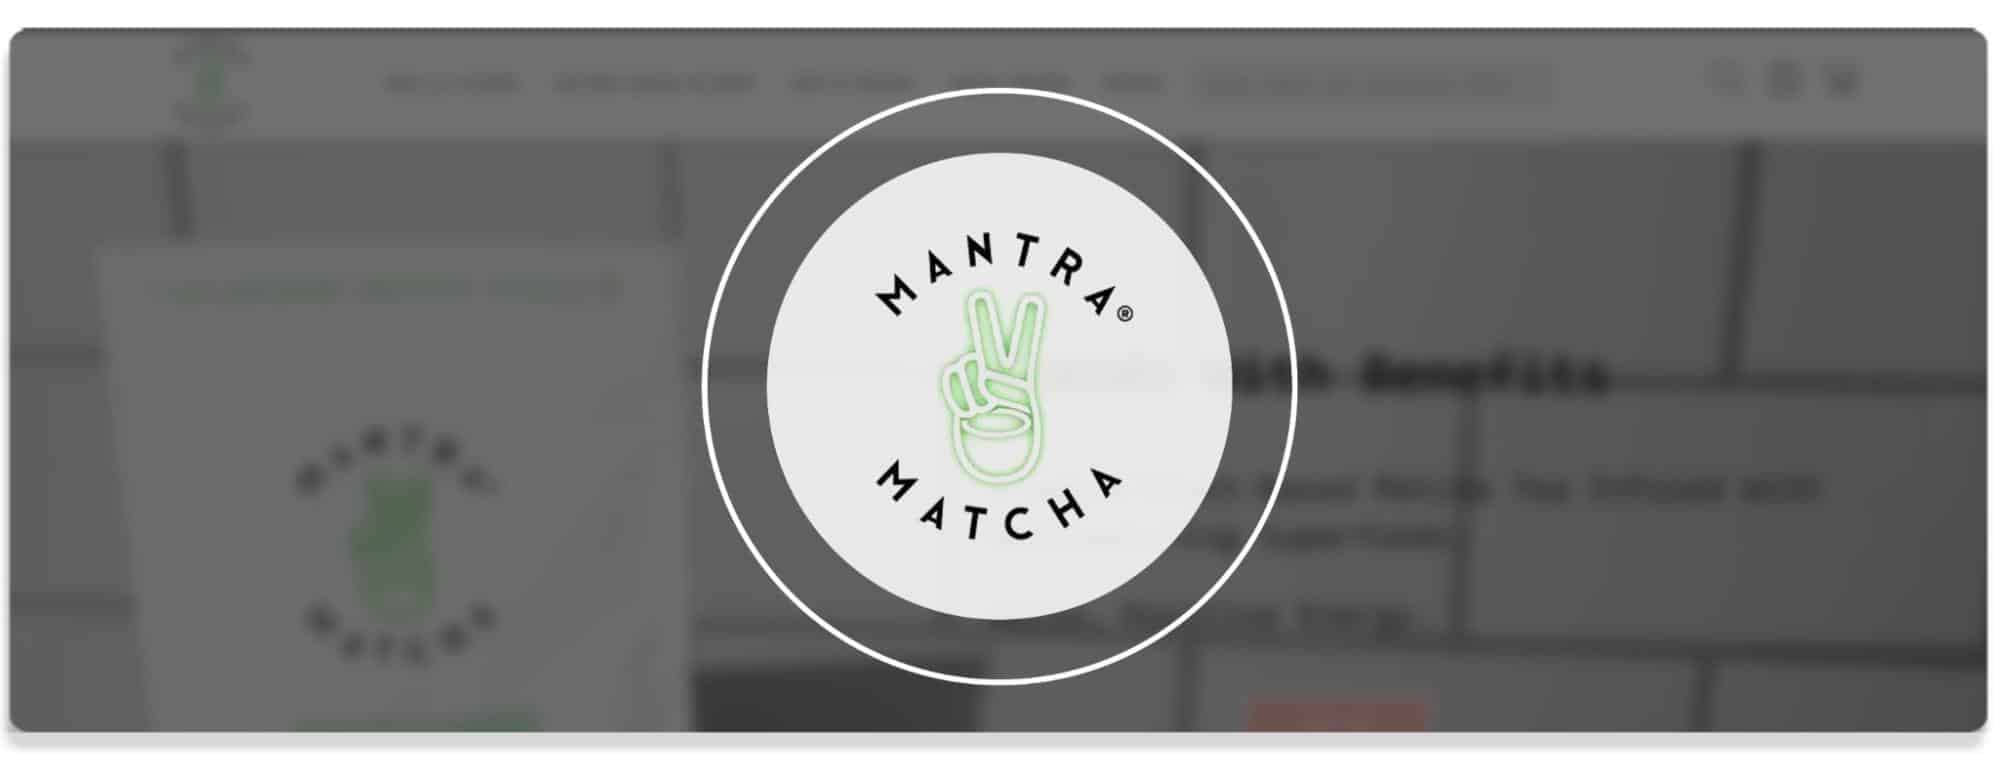 Mantra Match